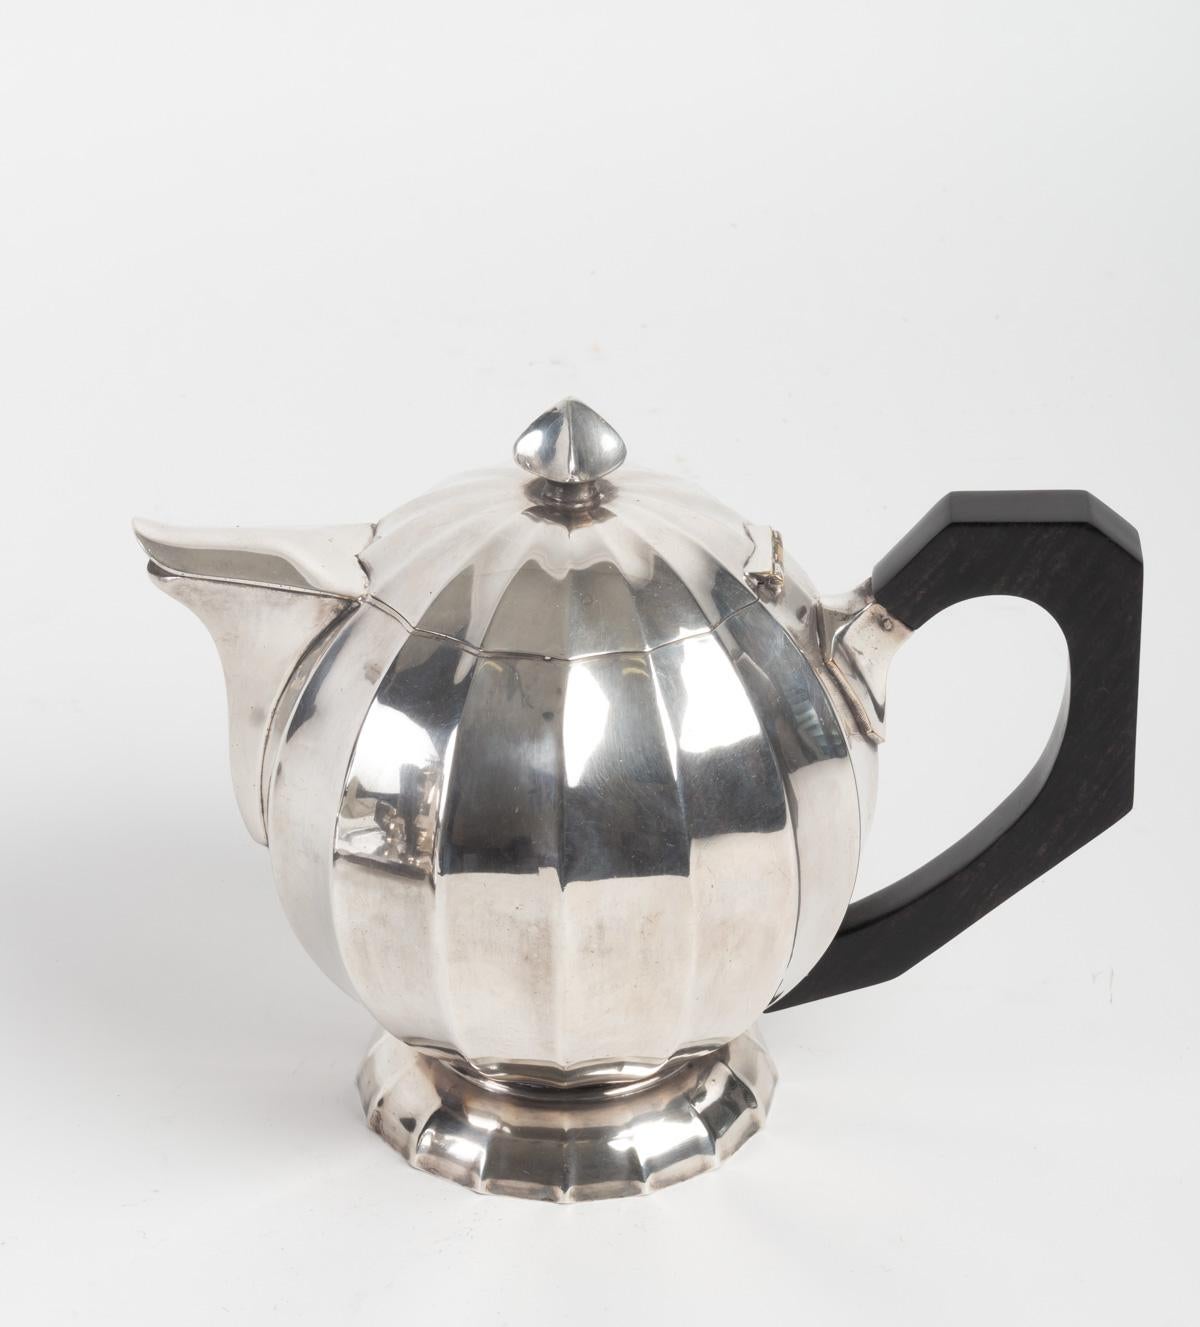 Silvered Set of 5 Pieces, Coffee Maker, Teapot, Milk Pot, Sugar Bowl, Tray, Silver Metal